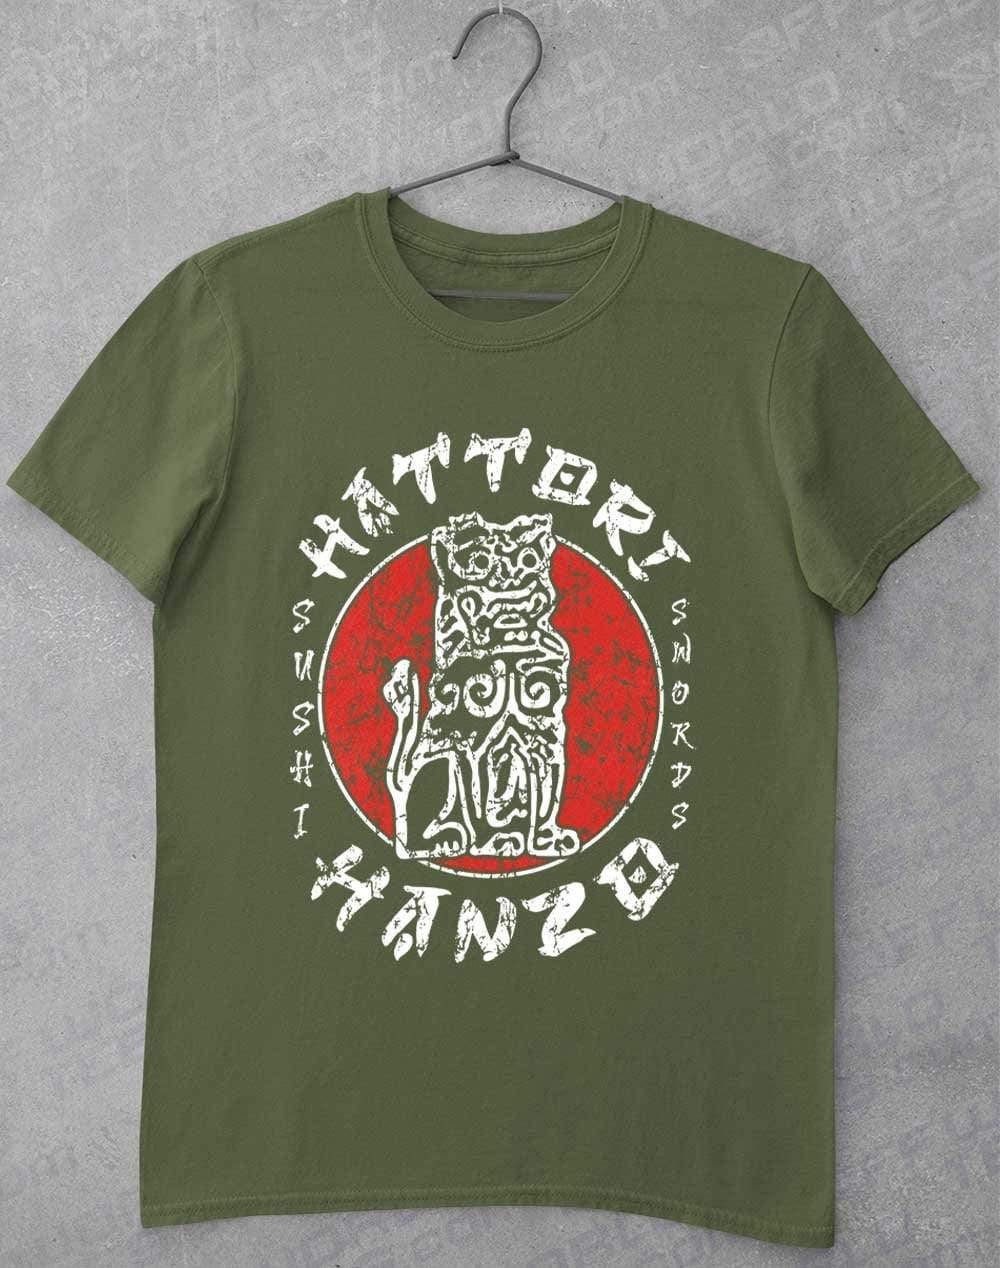 Hattori Hanzo T-Shirt S / Military Green  - Off World Tees